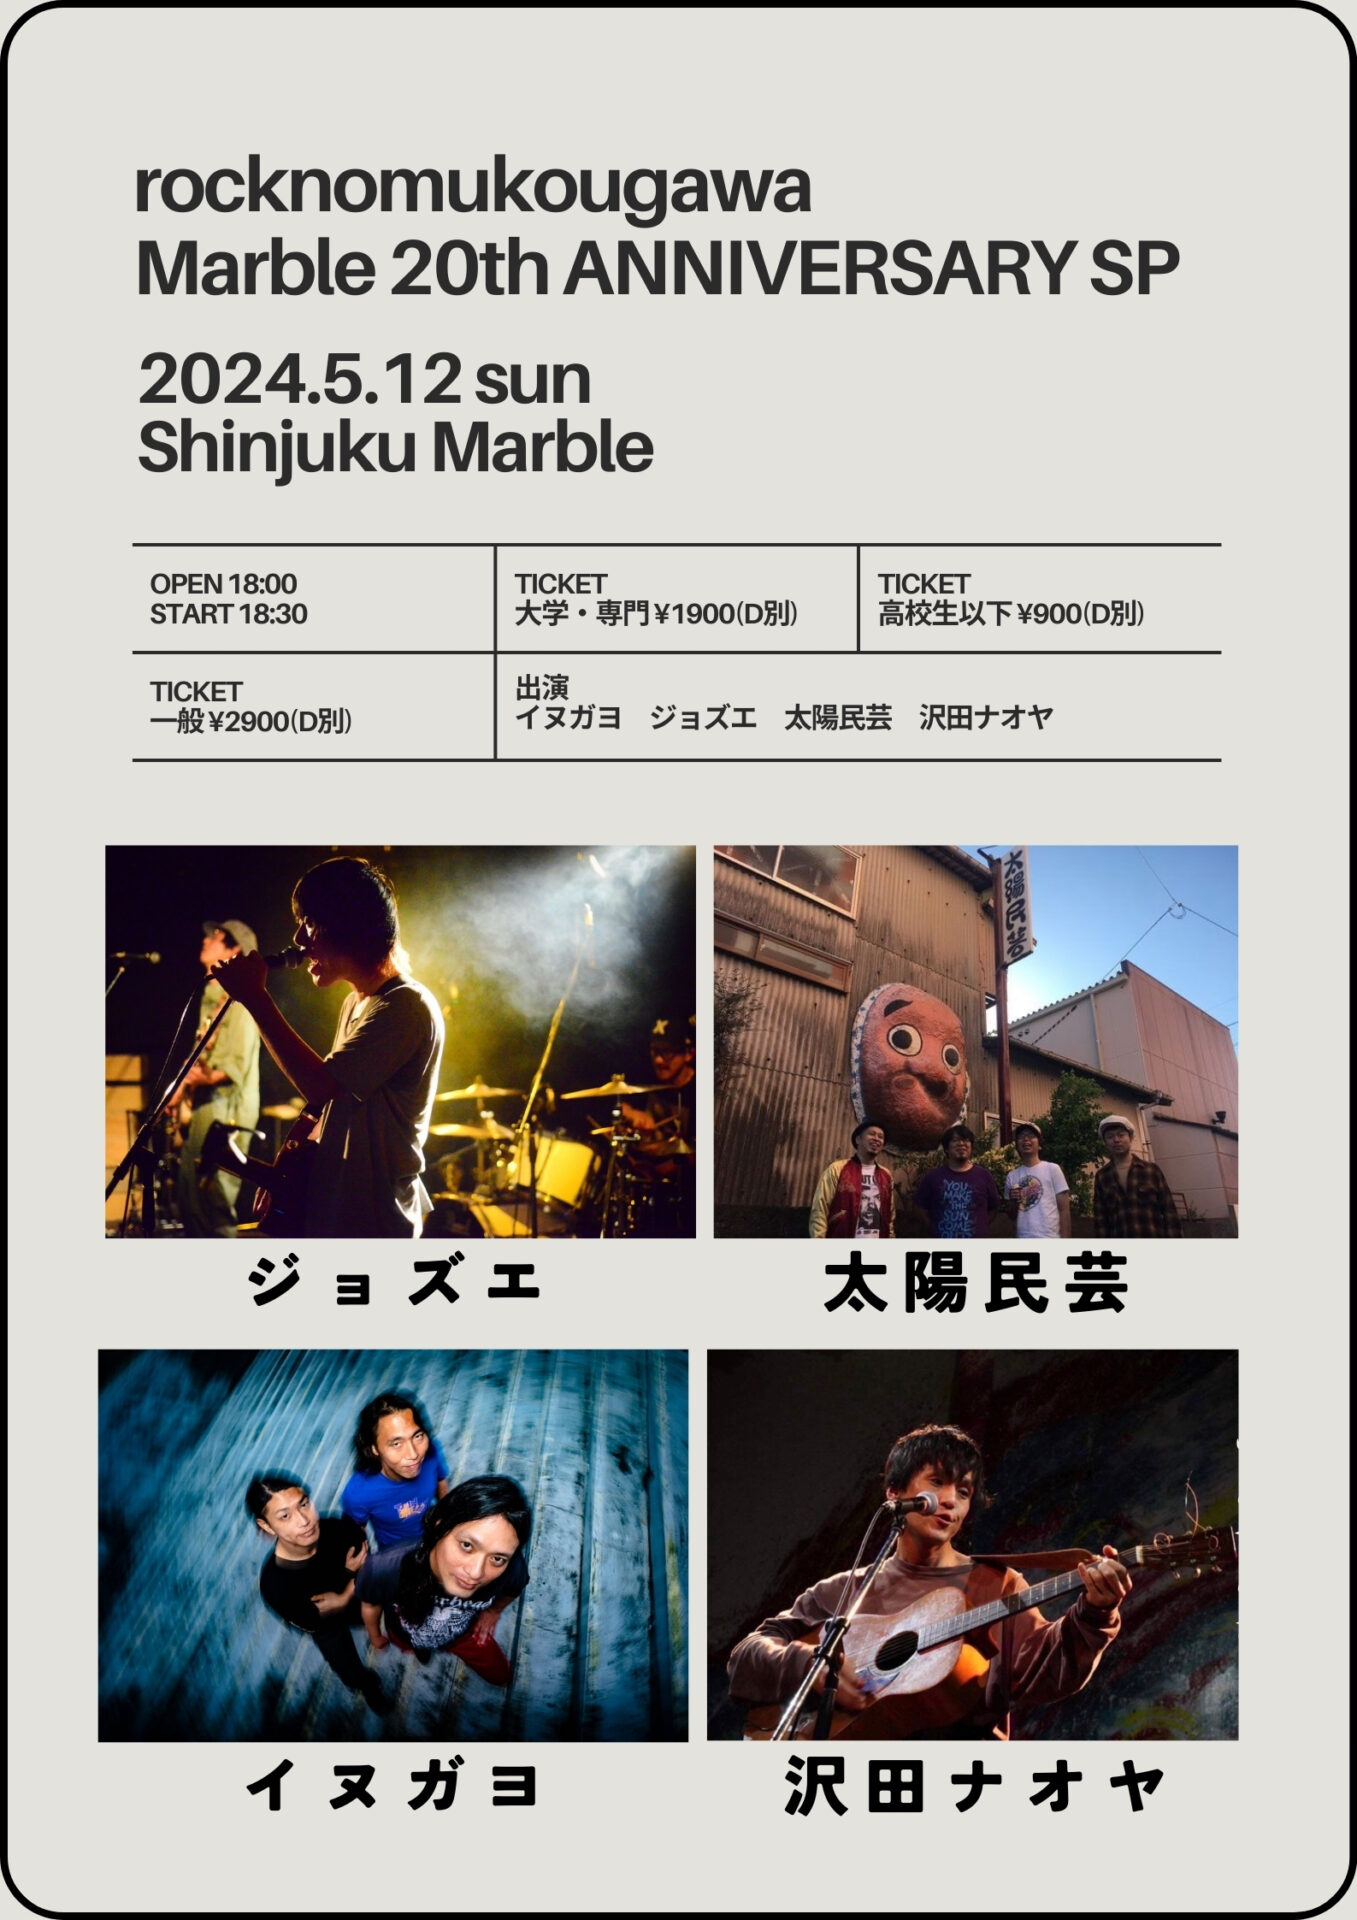 rocknomukougawa - Marble 20th ANNIVERSARY SP -